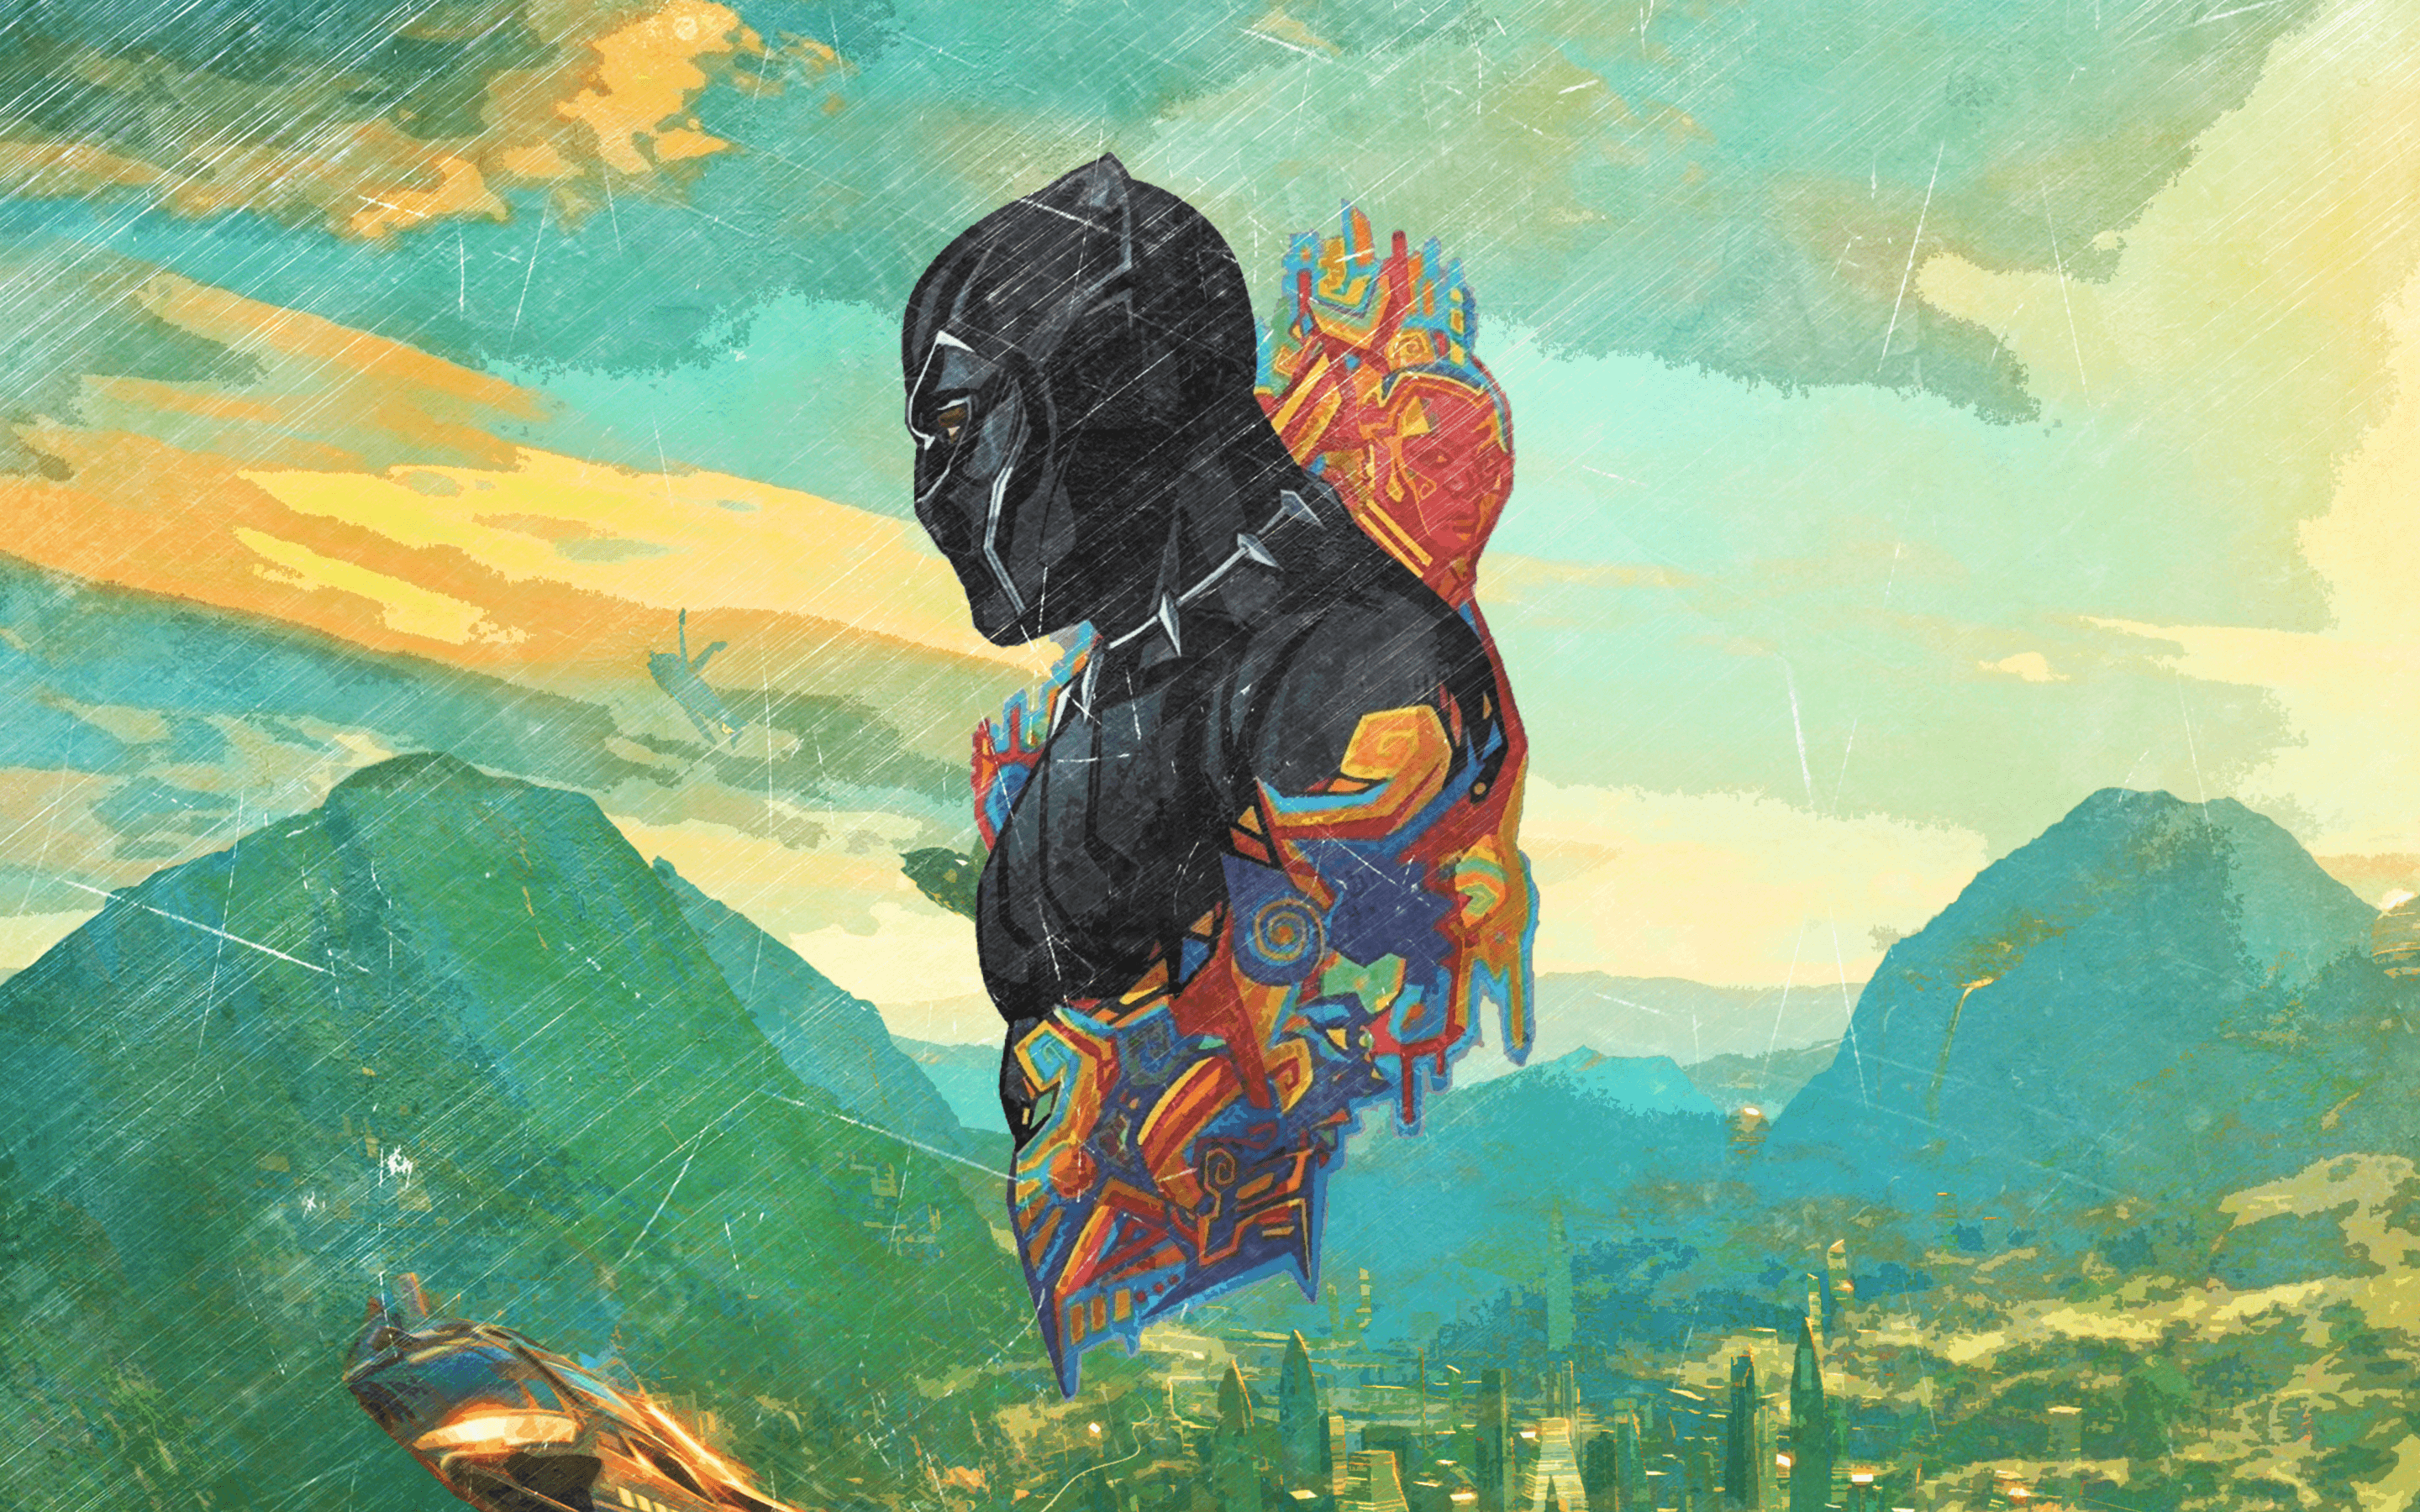 Wallpaper I created using the Black Panther promo art. Enjoy